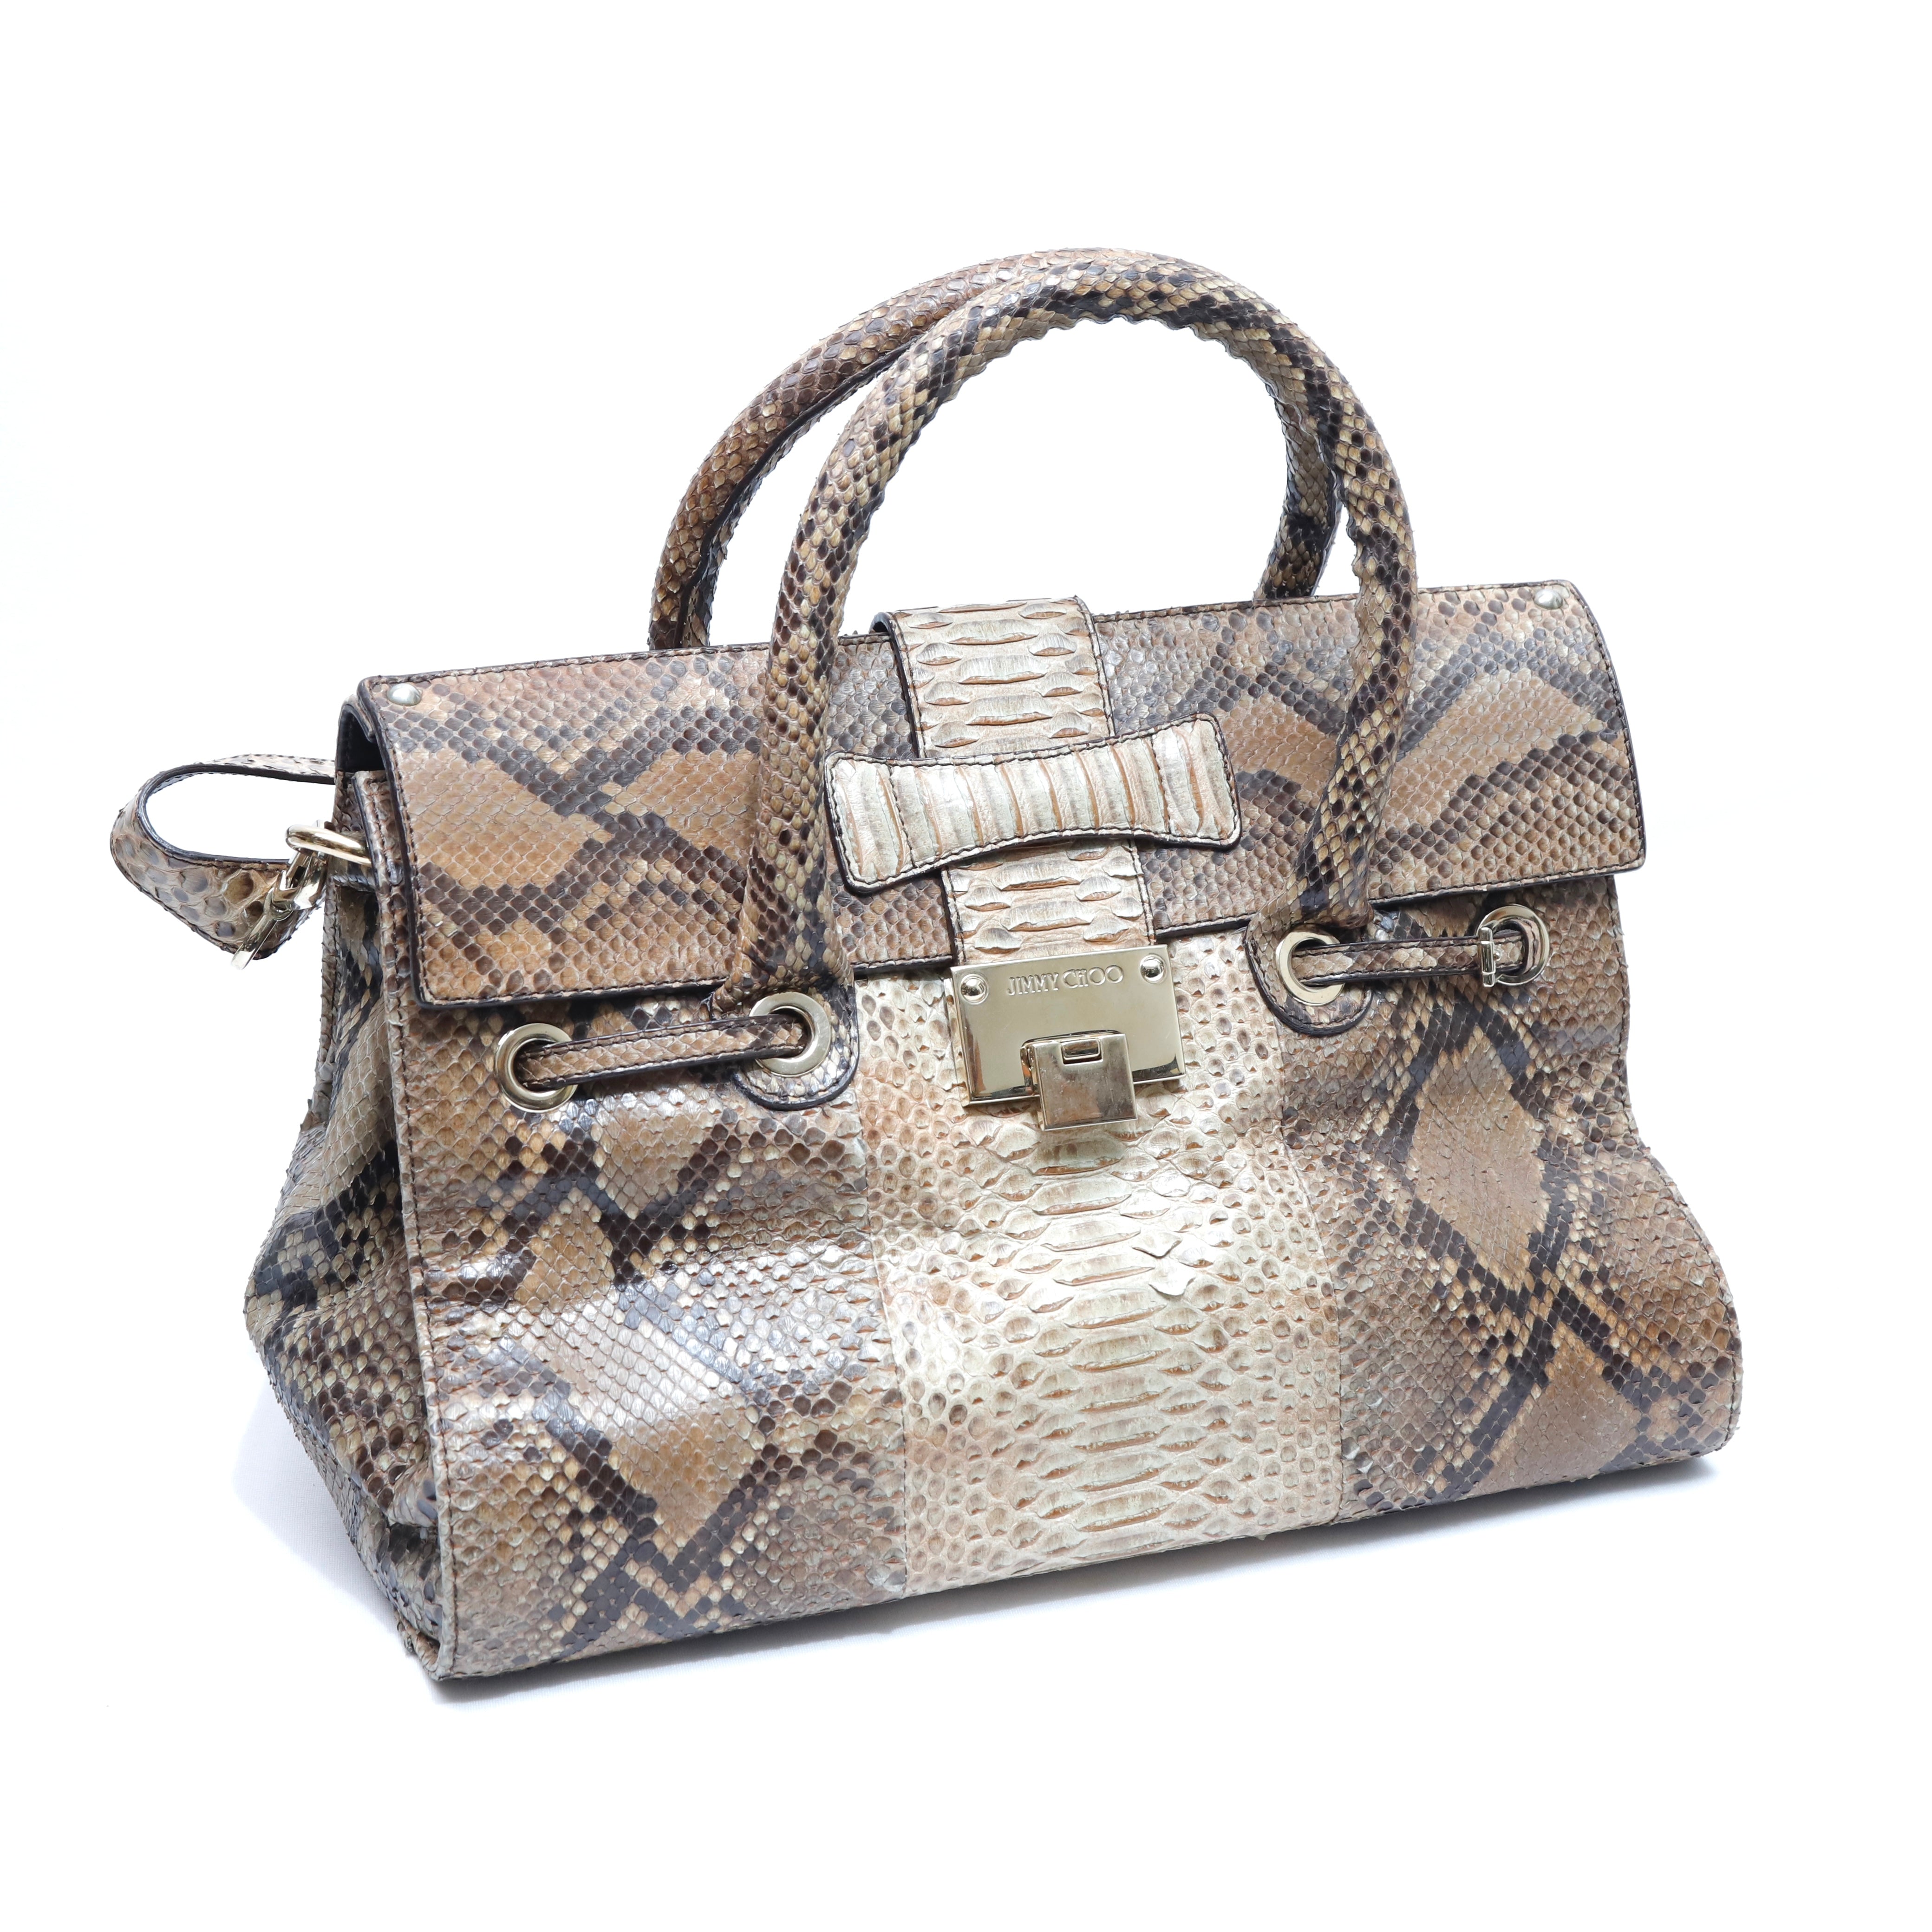 NatCole Calfskin Leather Handbag with a Matching Wallet (Tan): Handbags:  Amazon.com